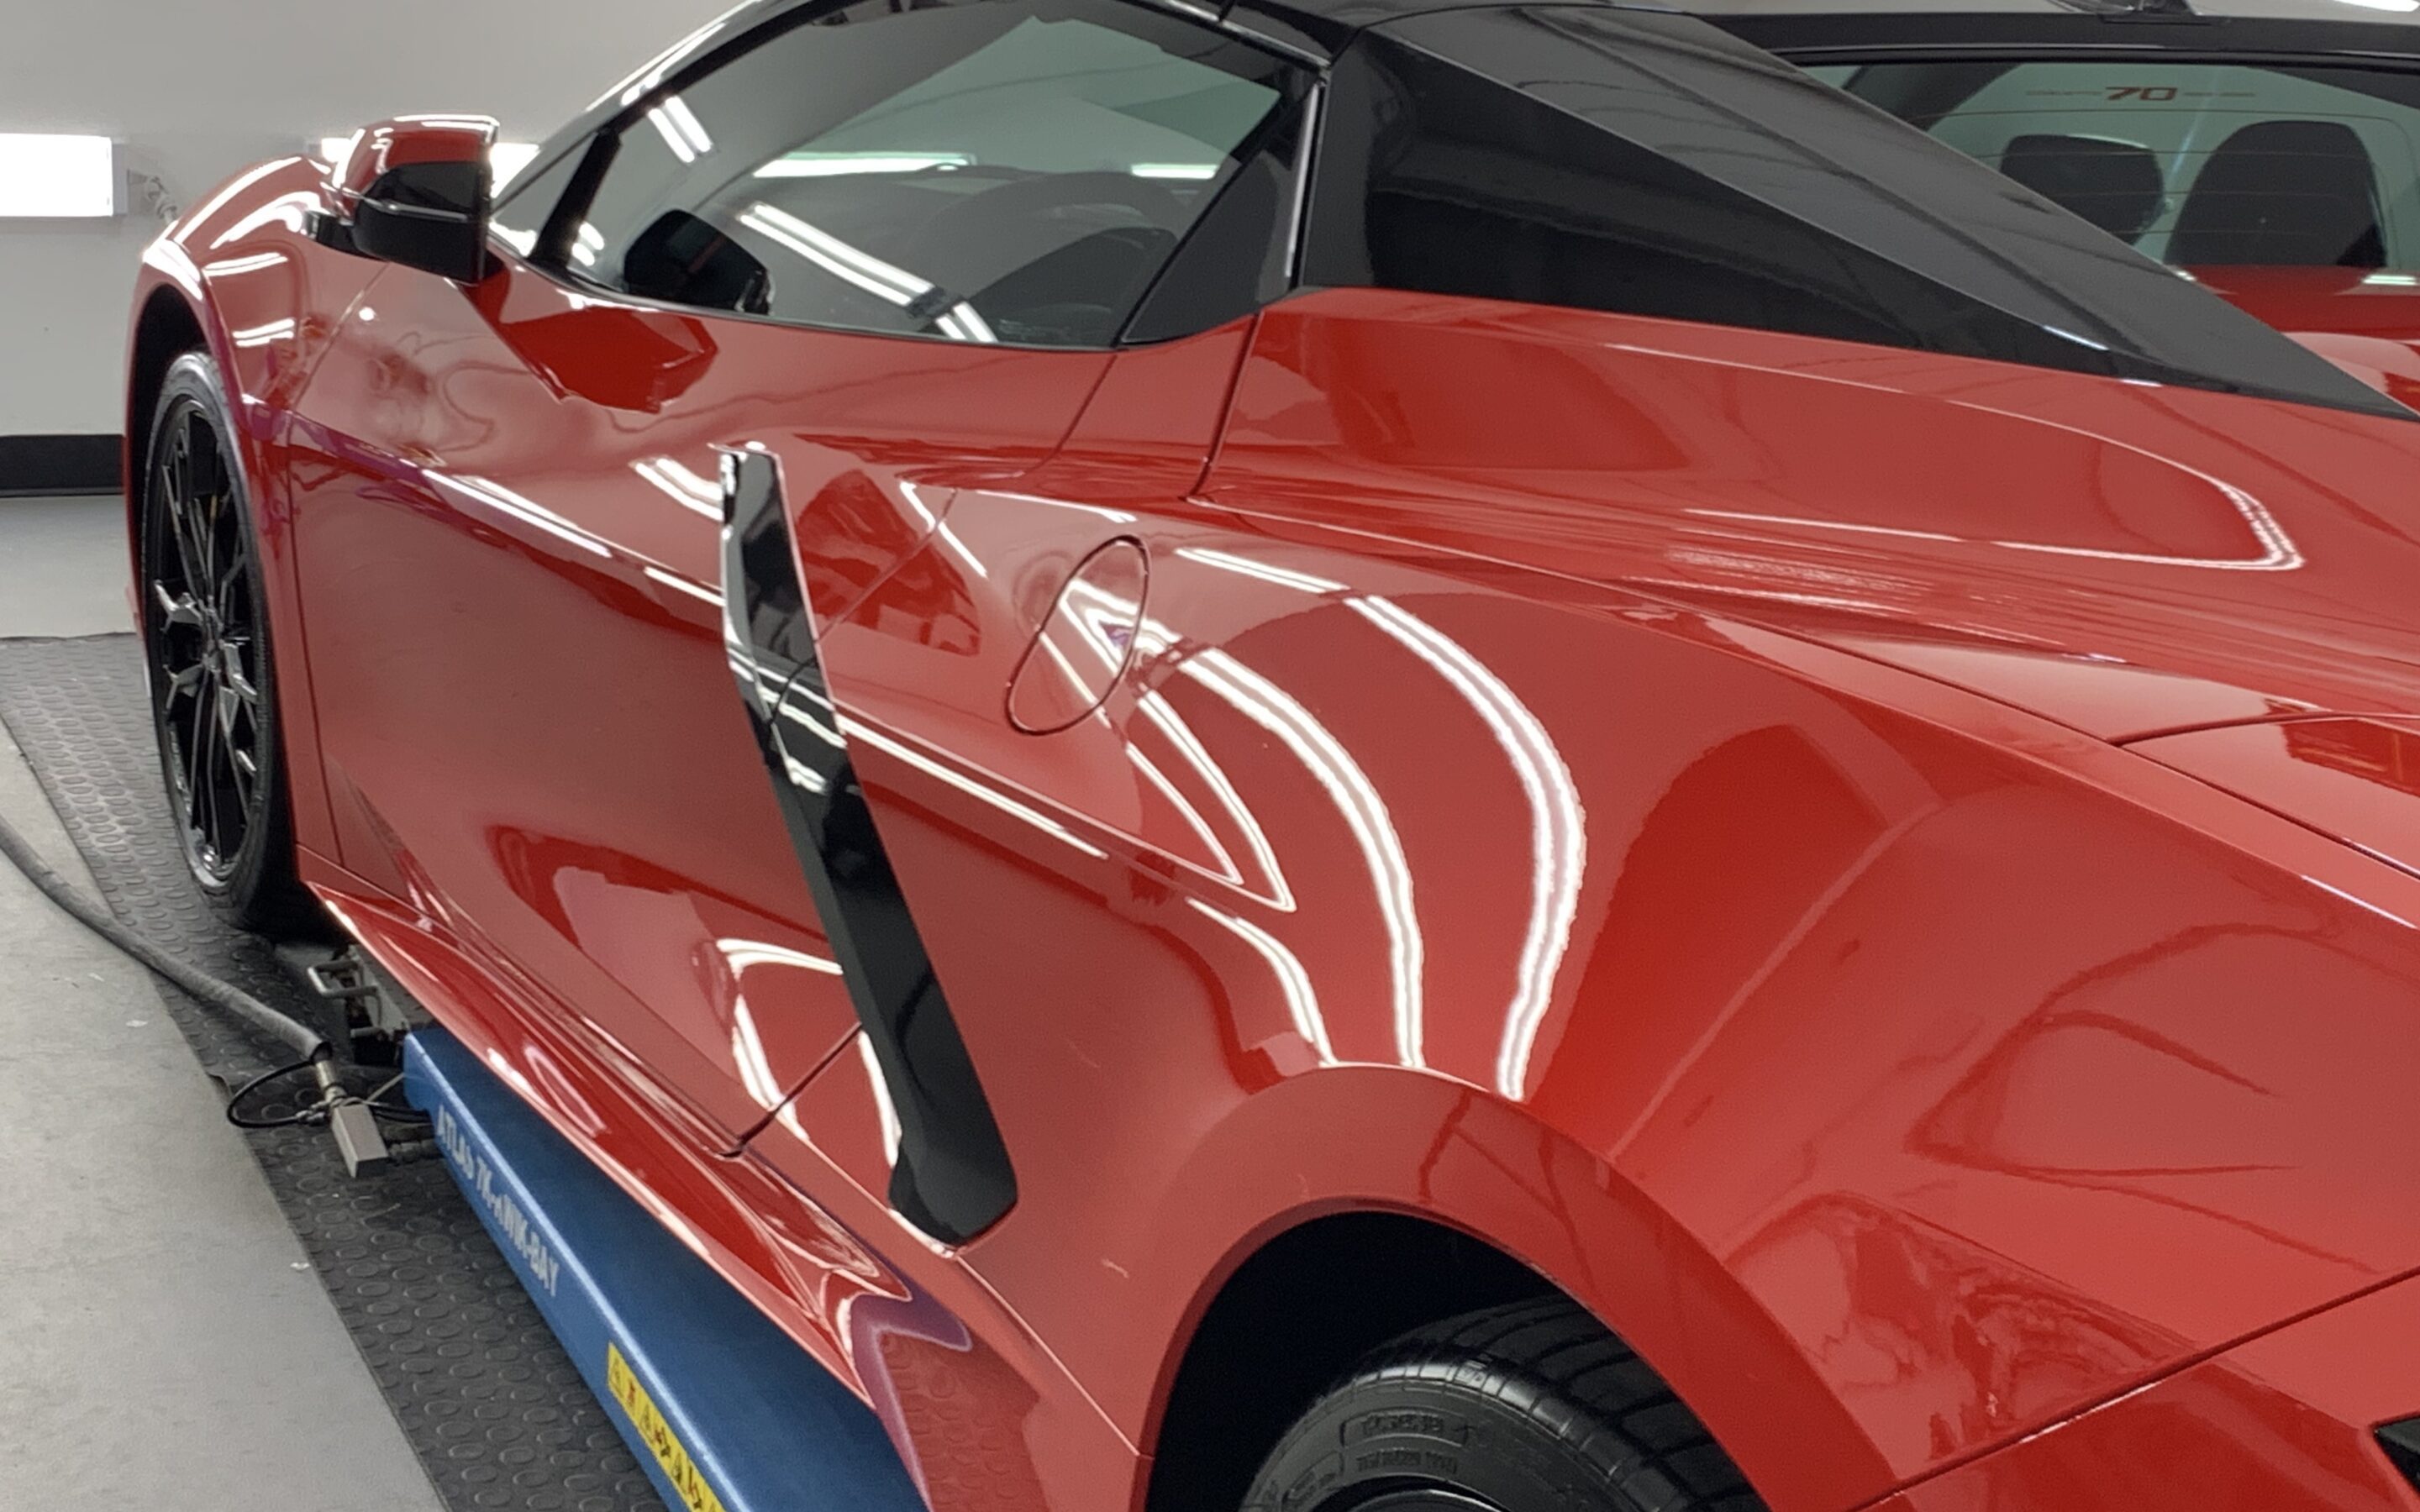 New Car Preparation of a 2022 Cheverlet Corvette